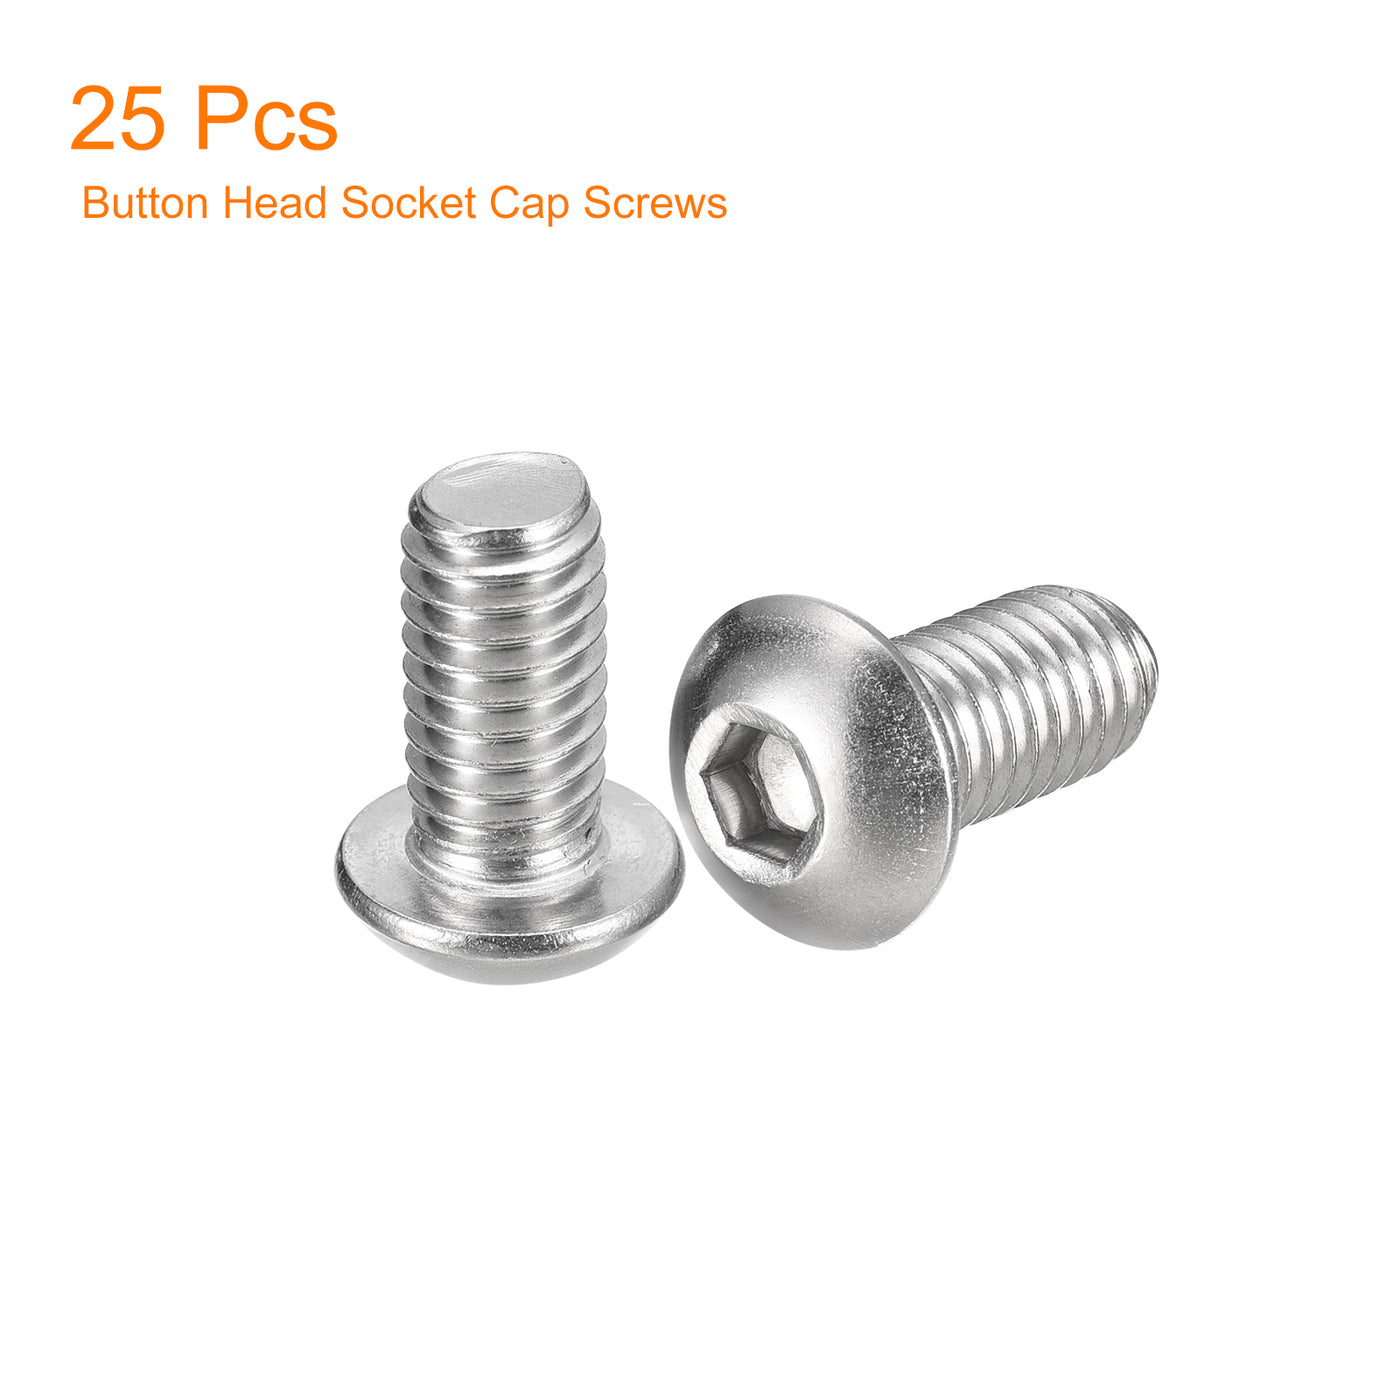 uxcell Uxcell 3/8-16x3/4" Button Head Socket Cap Screws, 25pcs 304 Stainless Steel Screws